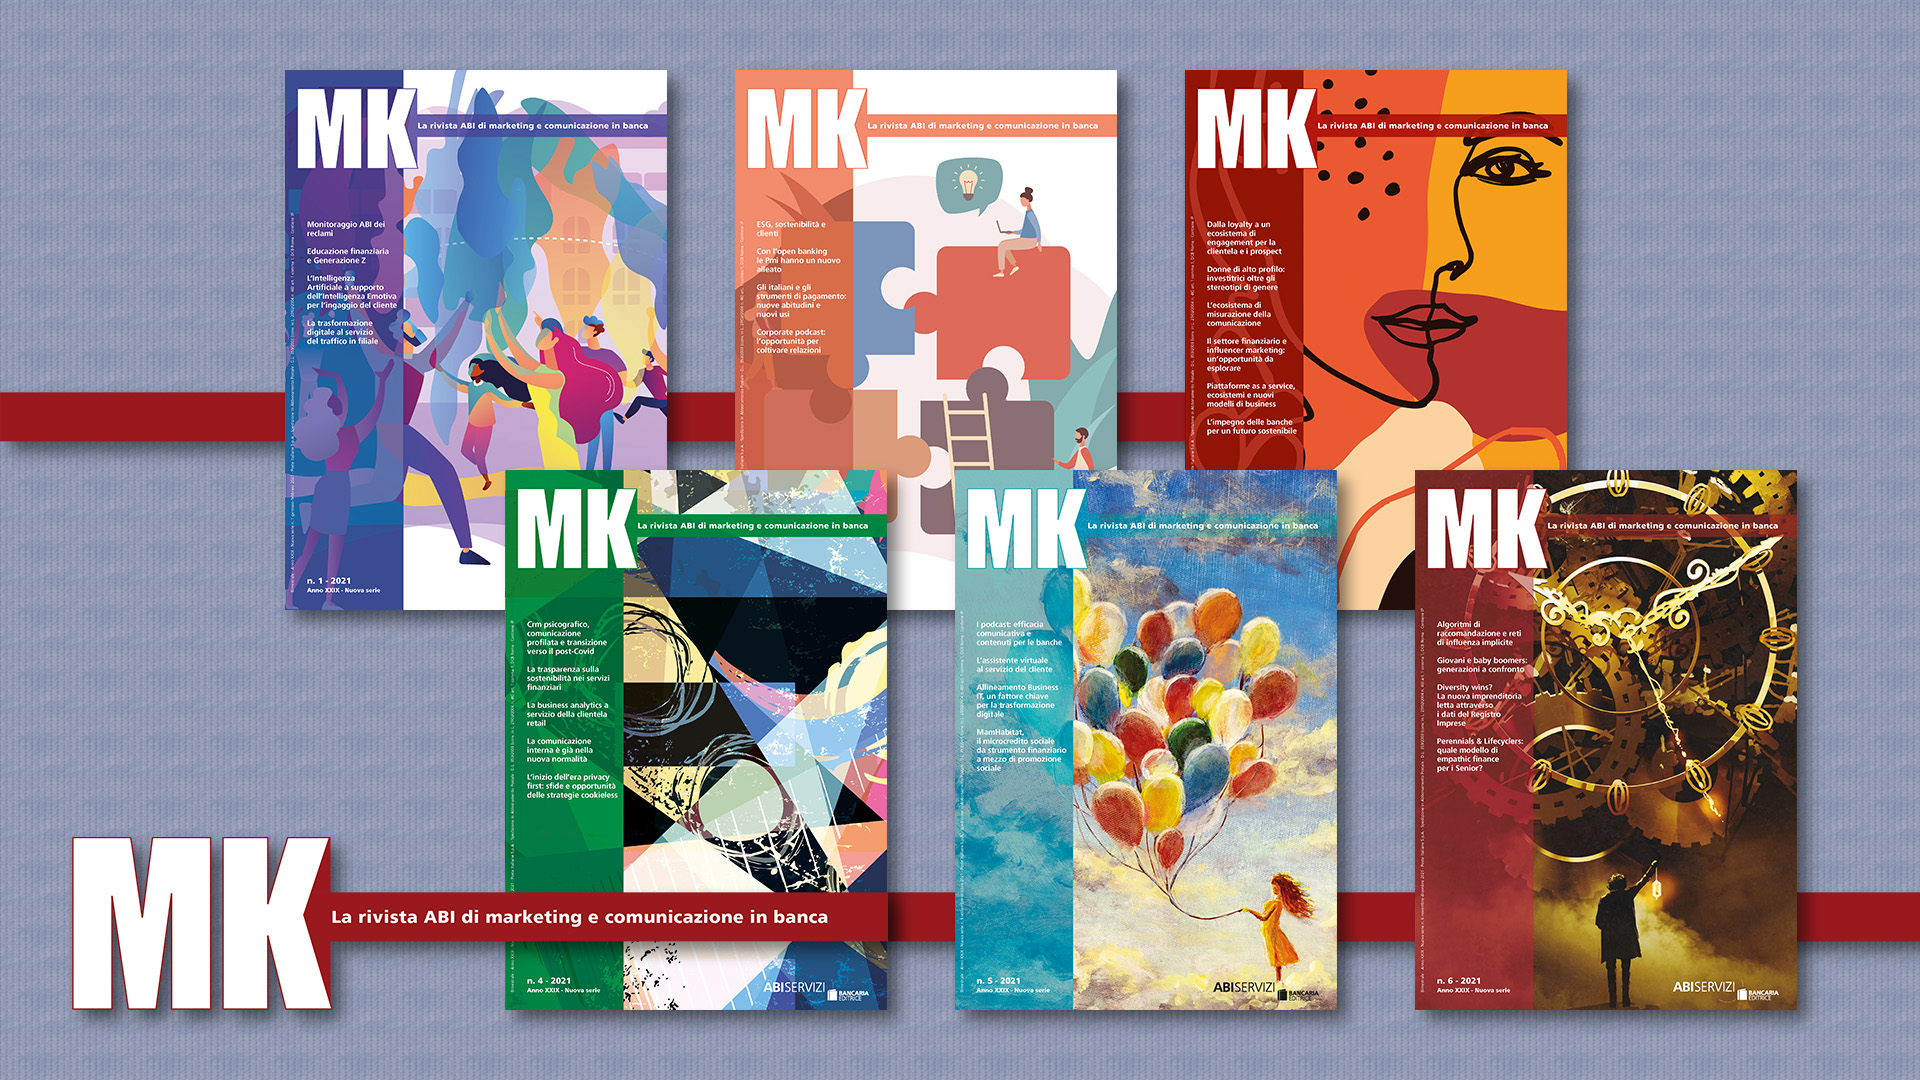 MK - Media Partner - #ilCliente